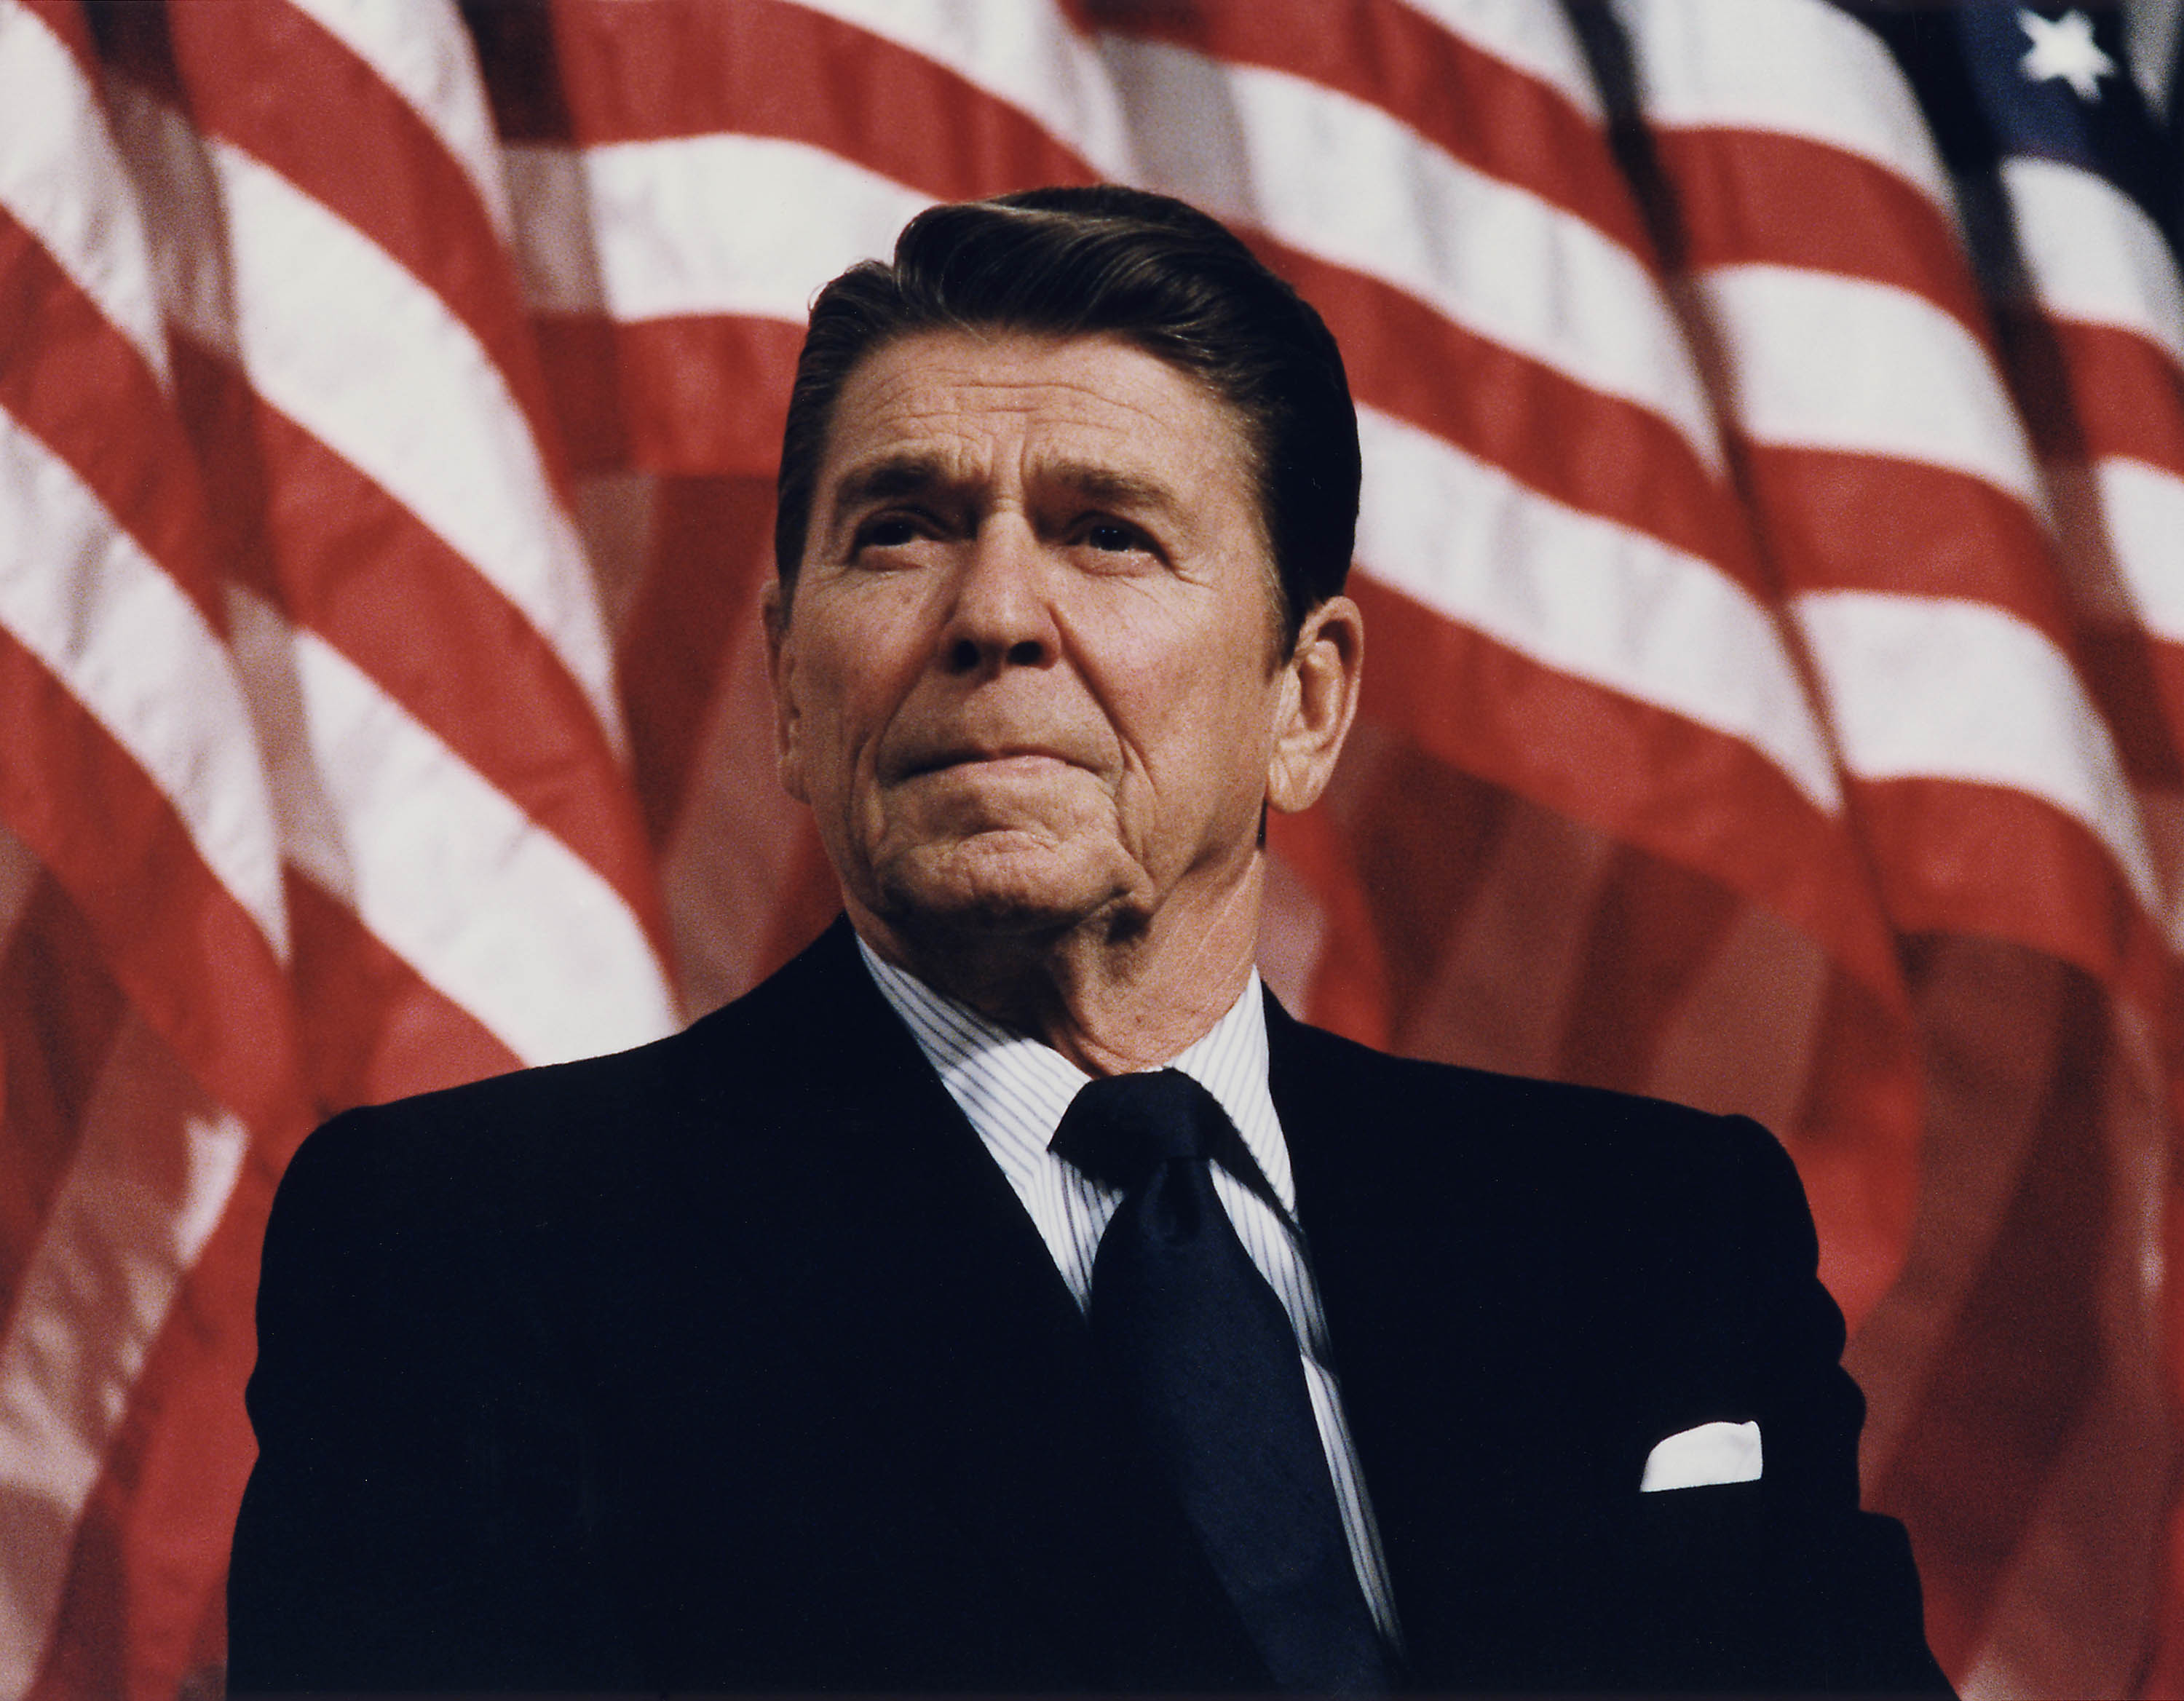 http://www.westernjournalism.com/wp-content/uploads/2013/08/Ronald-Reagan-SC.jpg